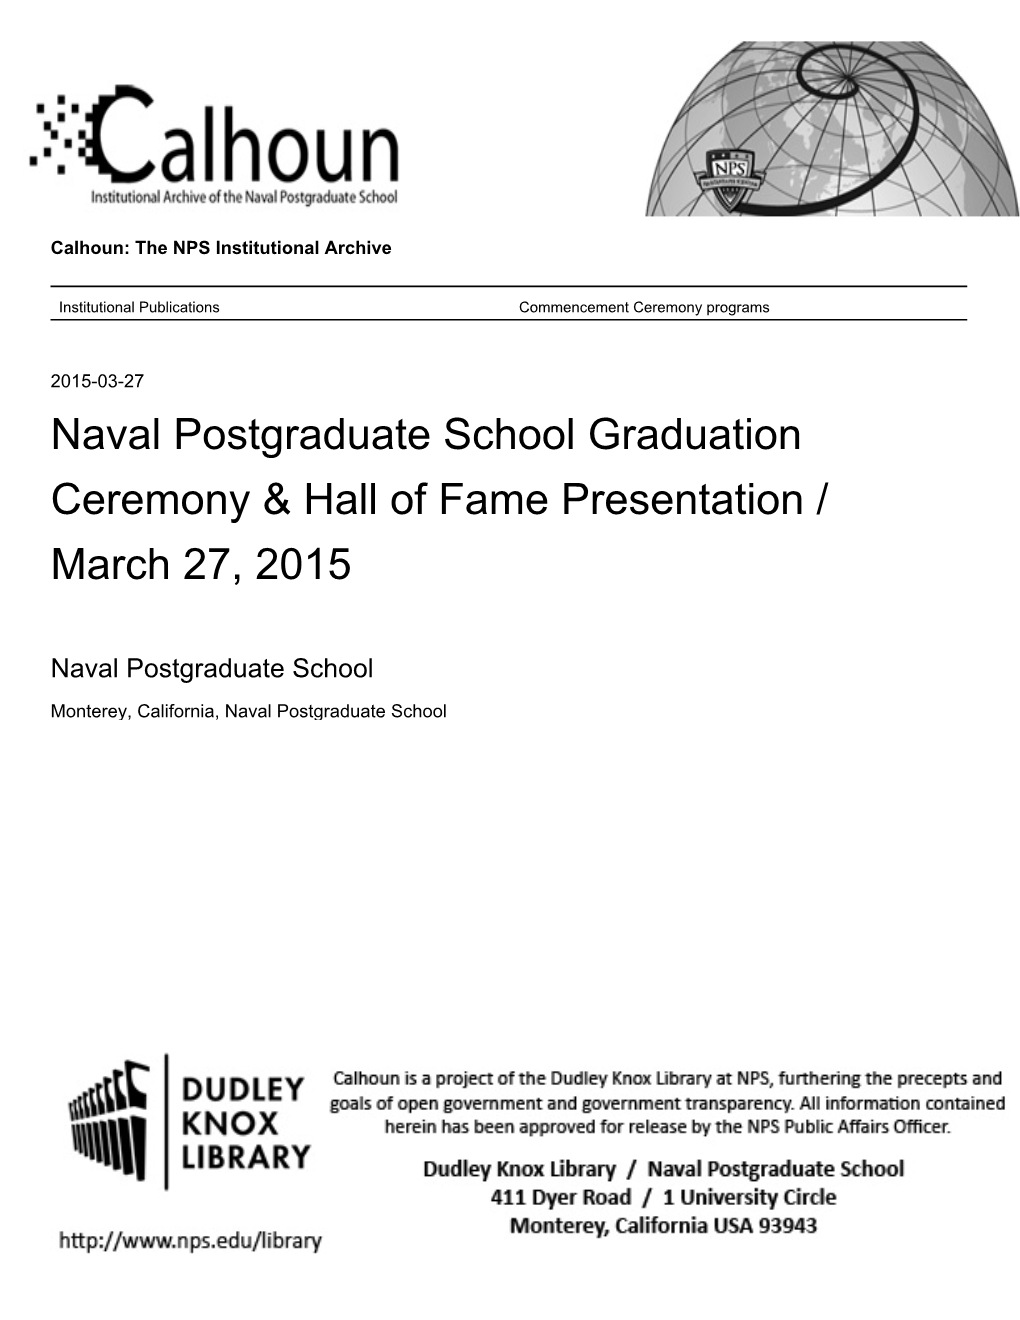 Naval Postgraduate School Graduation Ceremony & Hall of Fame Presentation / March 27, 2015